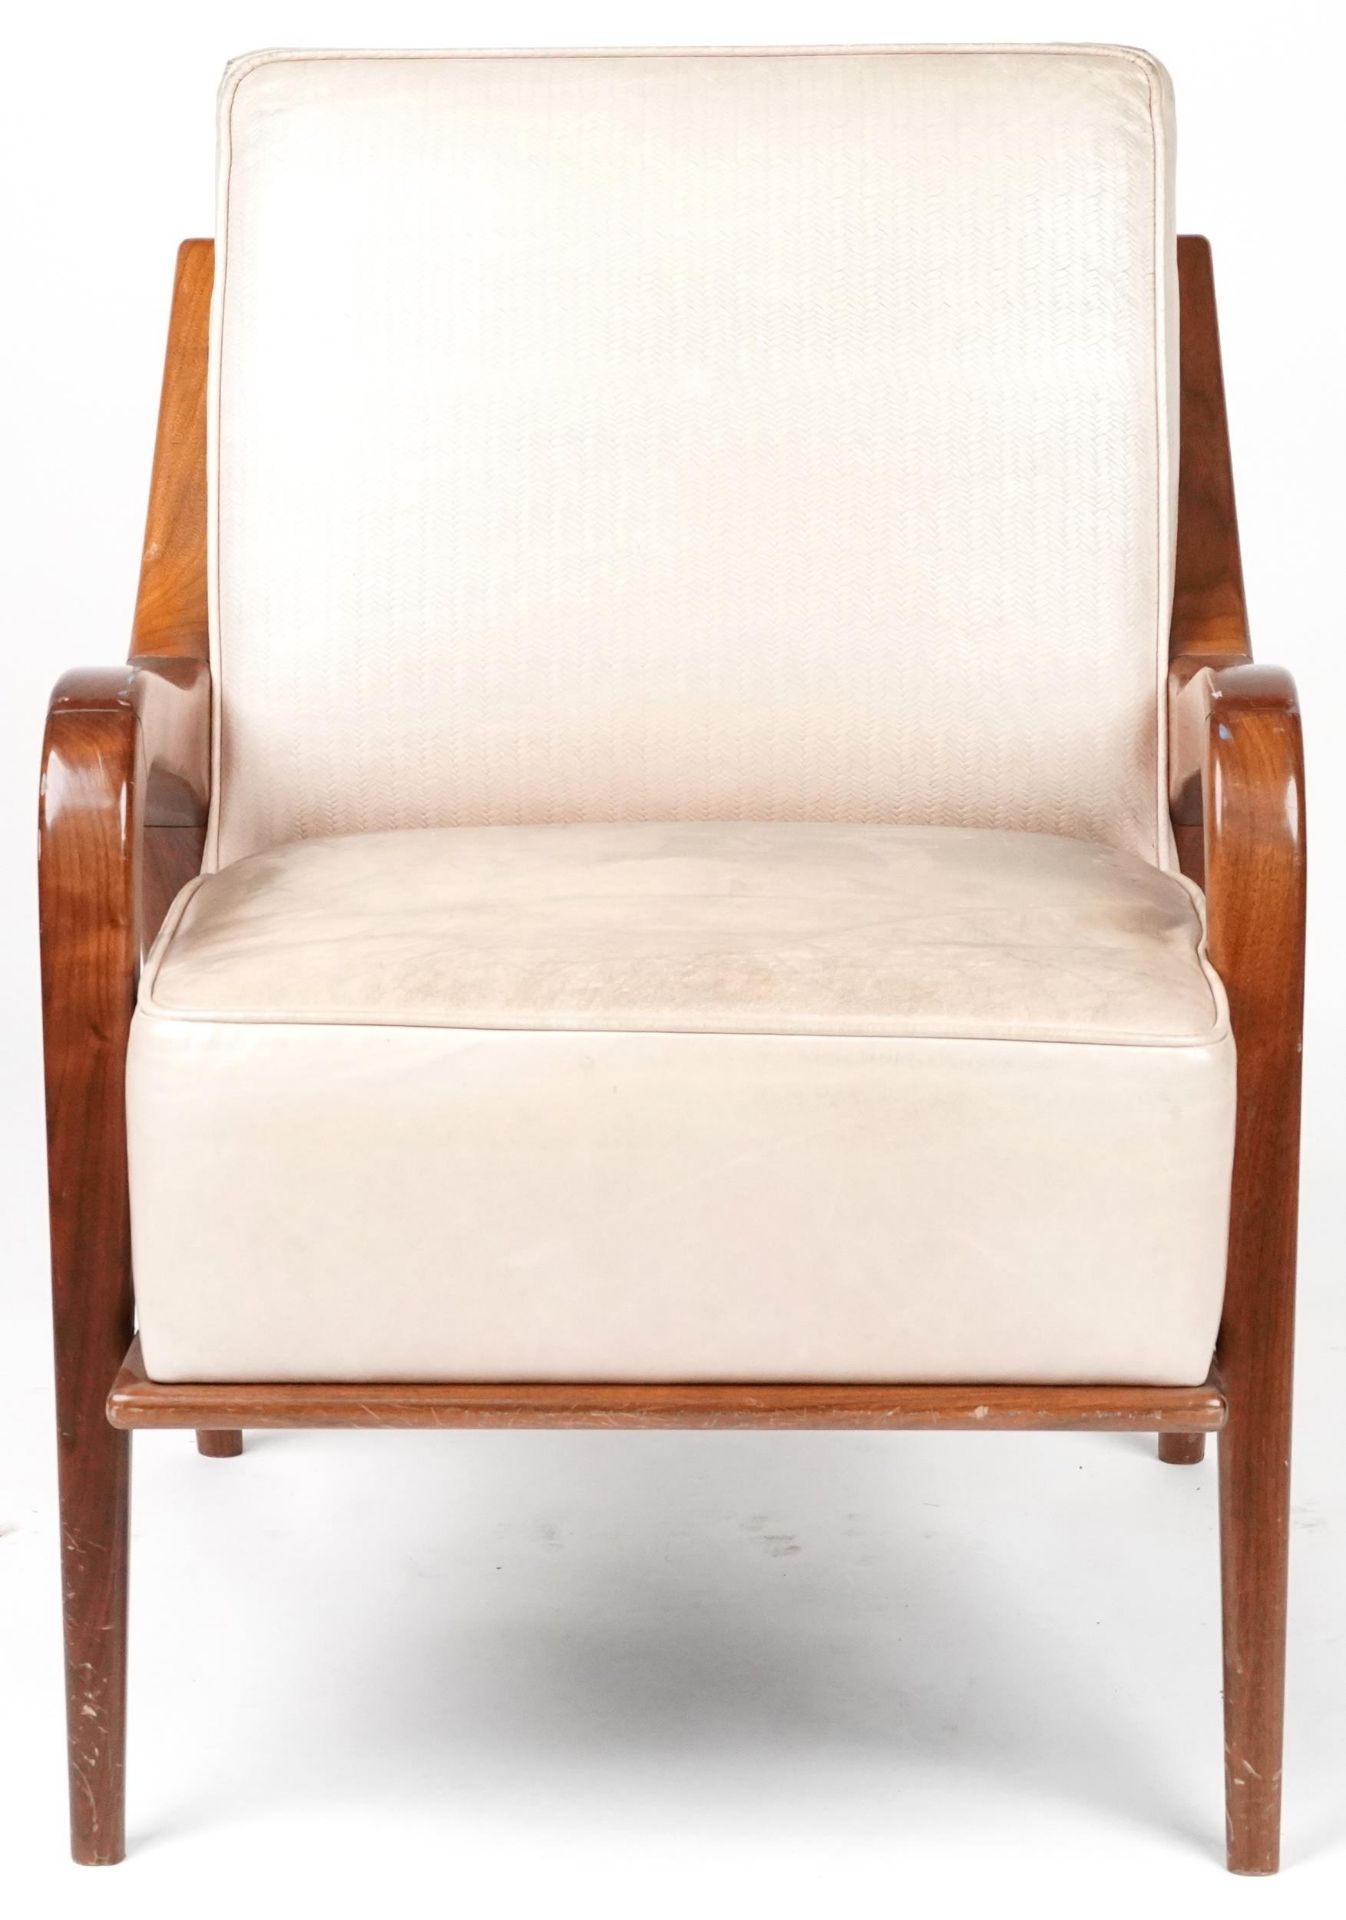 Scandinavian design hardwood lounge chair having cream upholstered back and seat, 86cm H x 62.5cm - Image 2 of 4